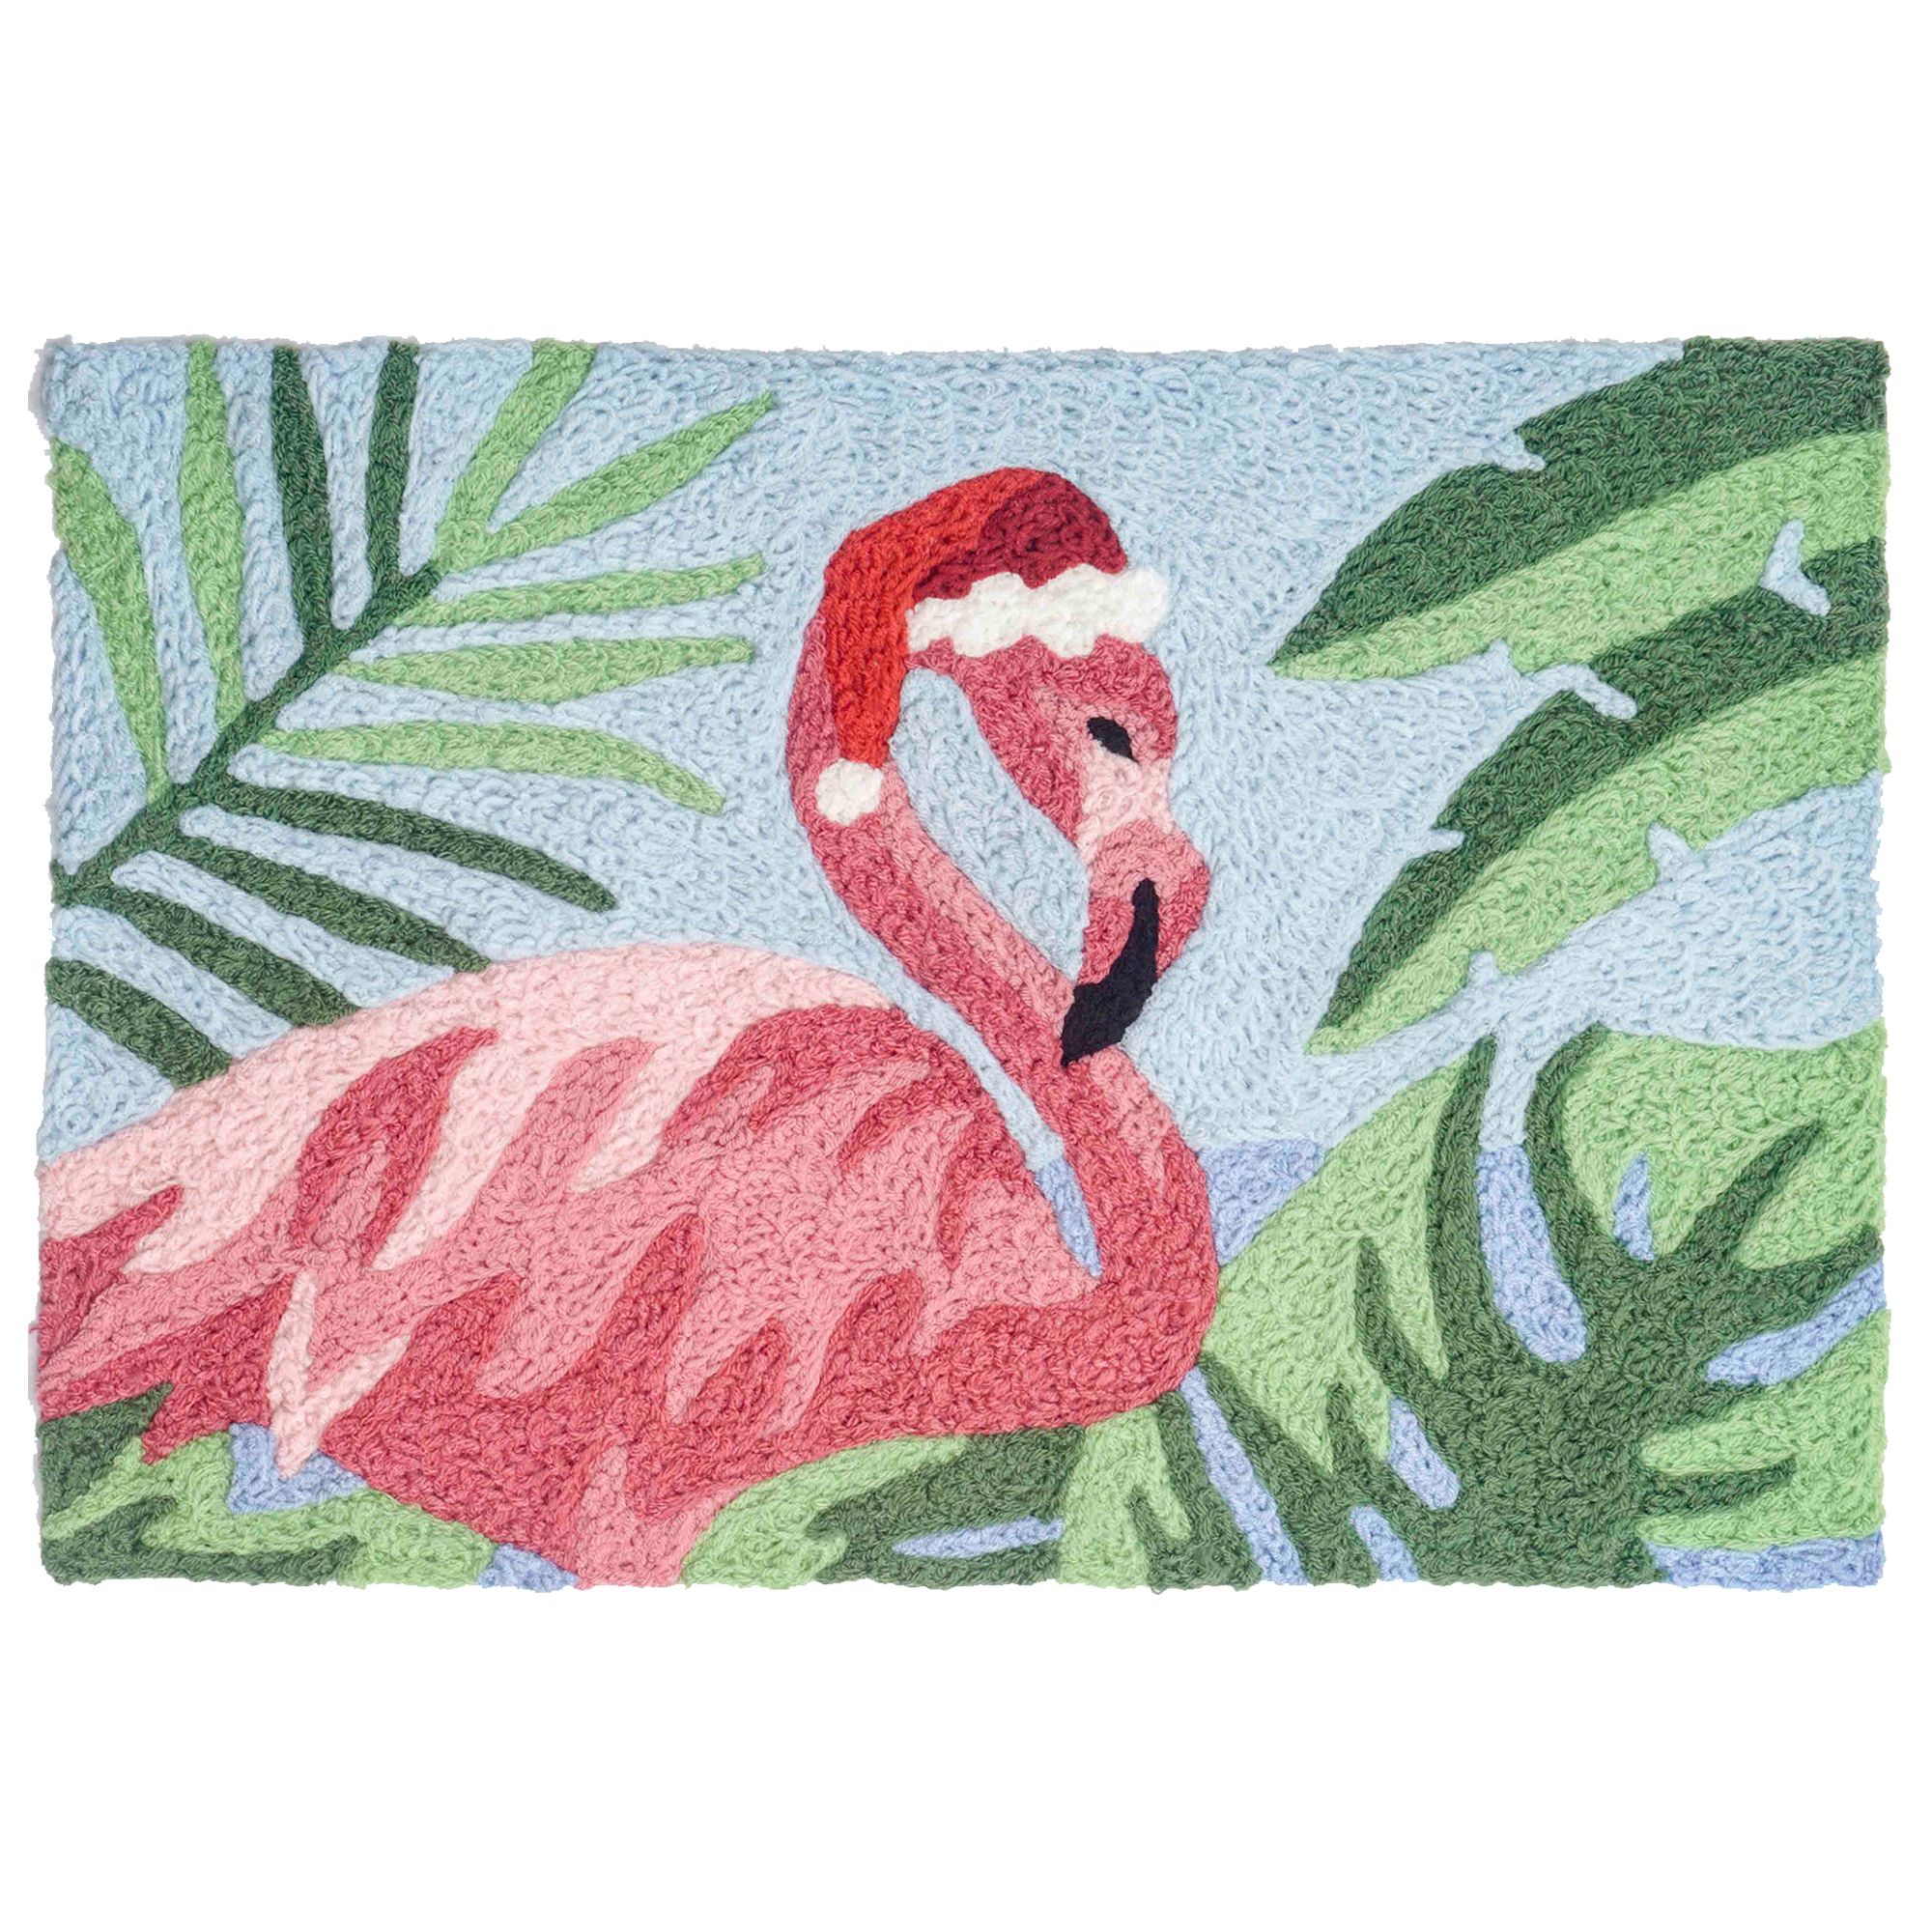 Homefires Rugs 1.5' x 2.5' Vibrant Flamingo Designed Rectangular Polyester Area Throw Rug